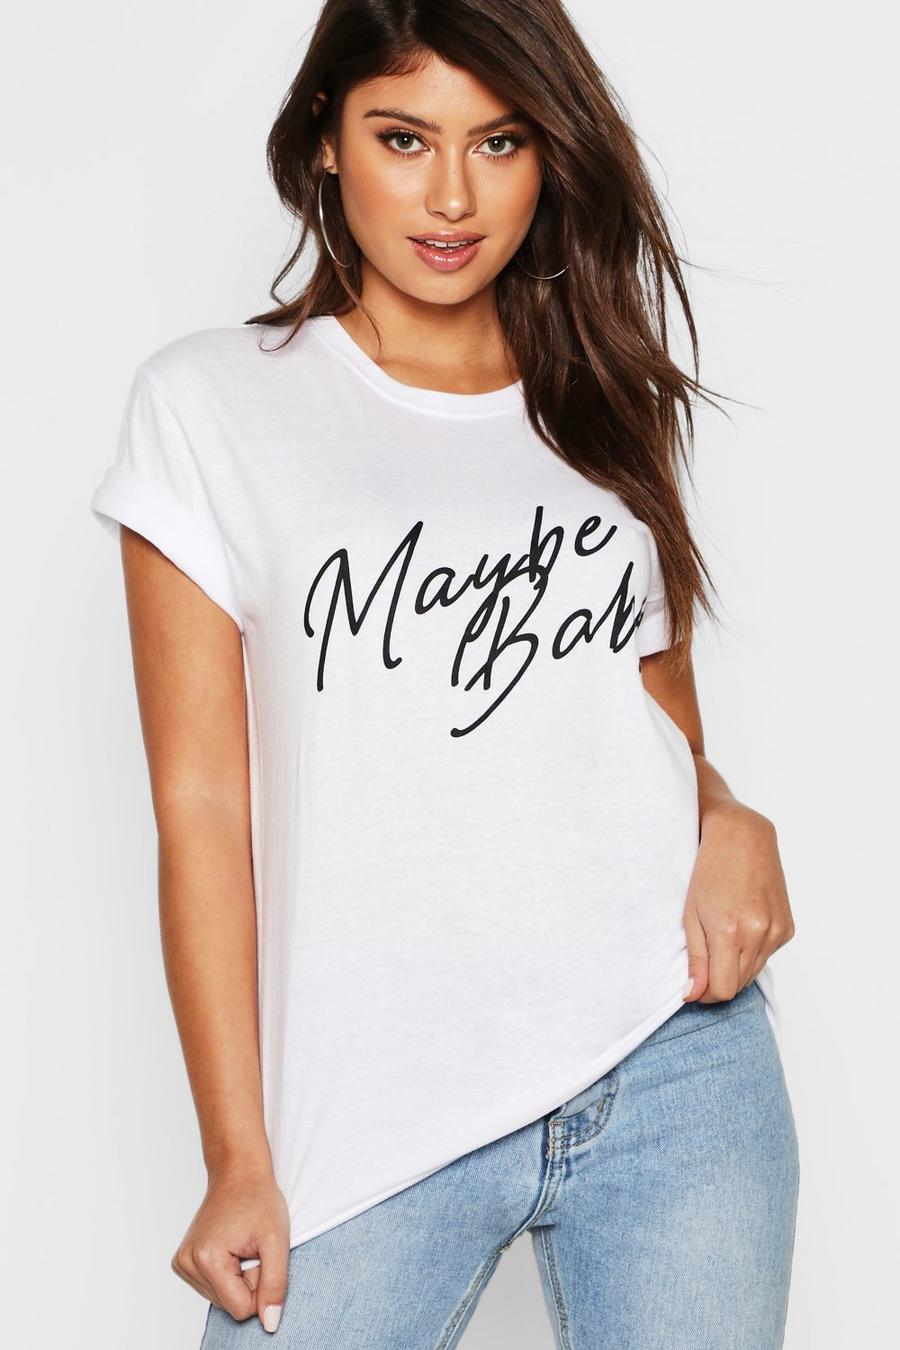 Camiseta con eslogan “Maybe Baby” image number 1